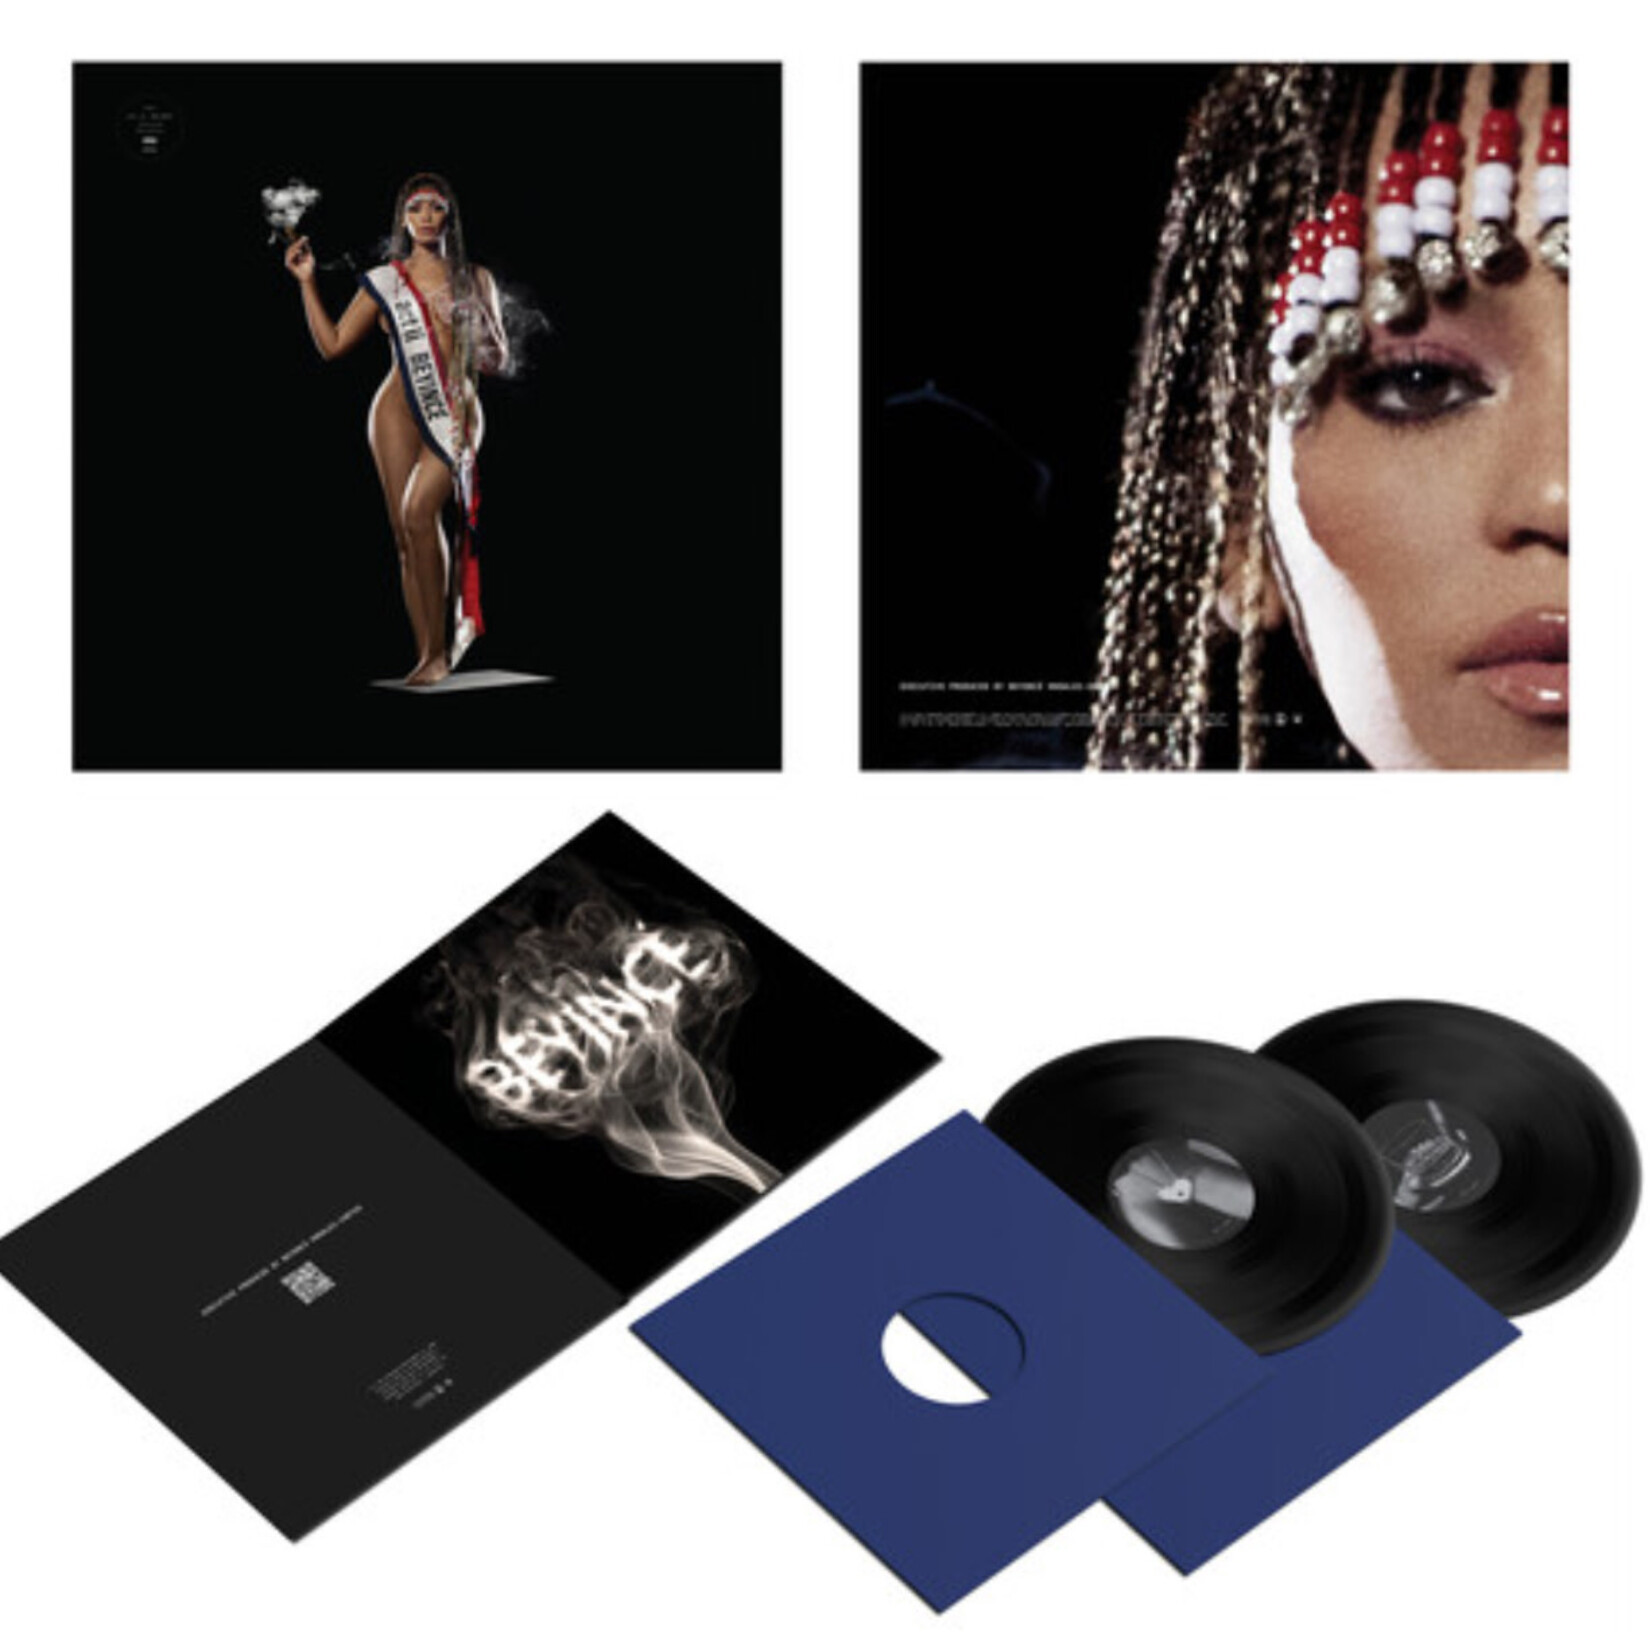 Beyonce - Cowboy Carter (Bead Face) - CLBI889493 - Vinyl LP (NEW)